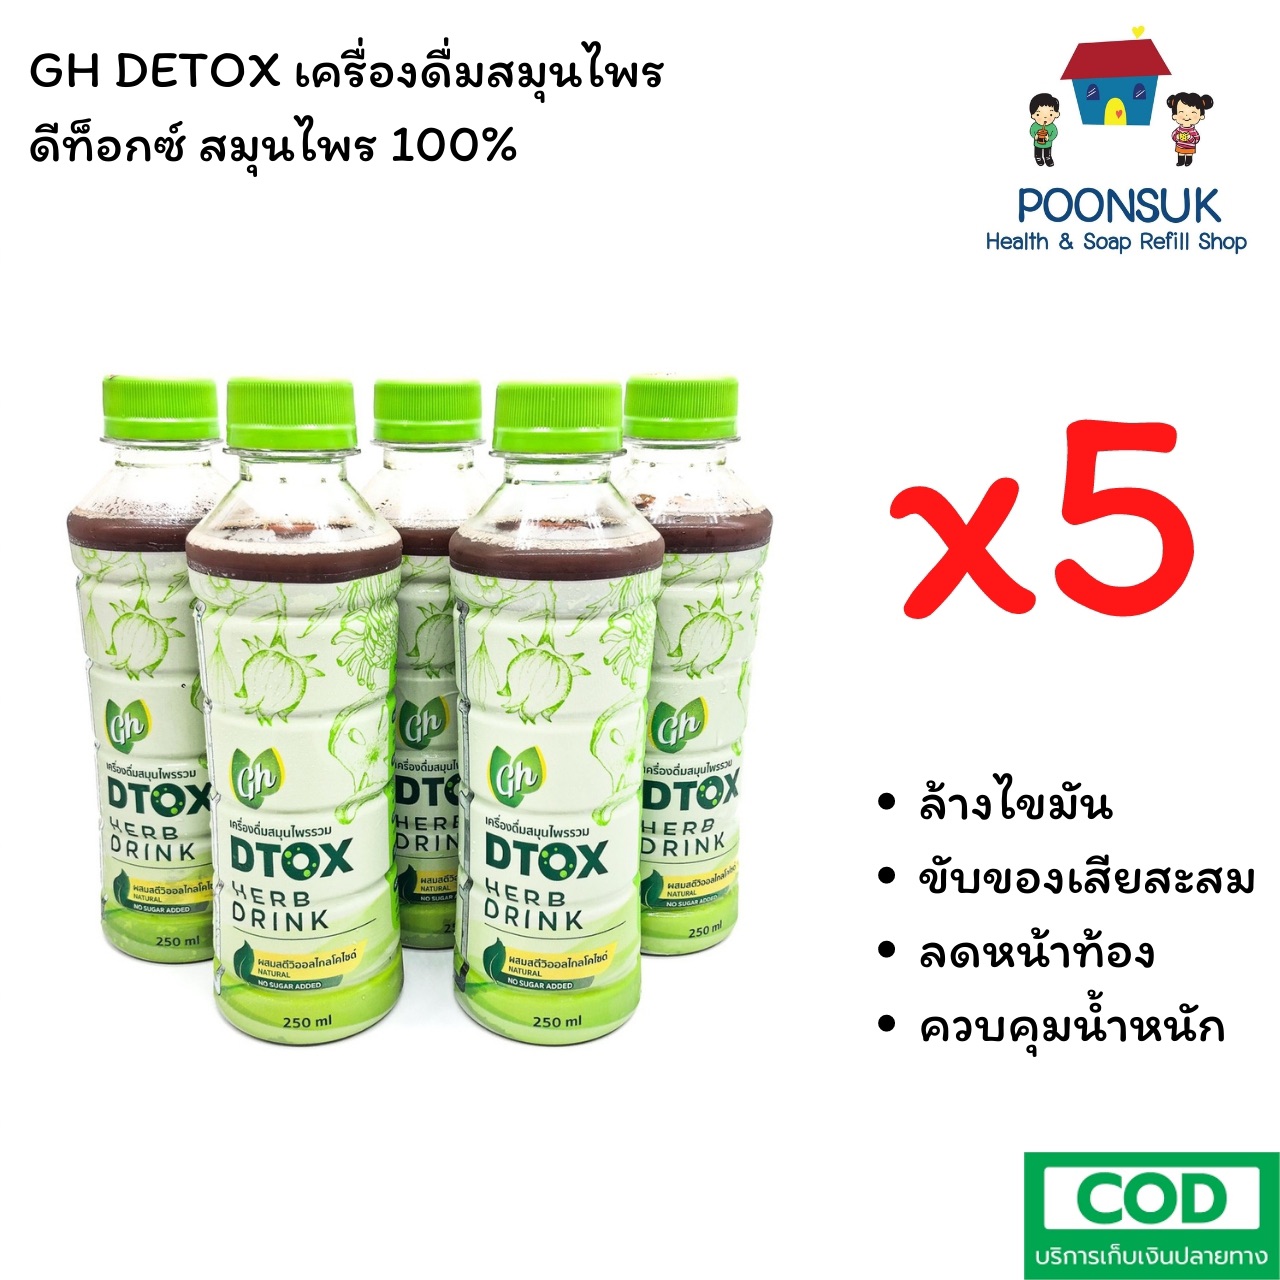 GH detox herb drink 5 ขวด เครื่องดื่มสมุนไพร ดีท็อกซ์ สมุนไพร 100%ล้างไขมัน ขับของเสียสะสม ลดหน้าท้องควบคุมน้ำหนัก 250ml